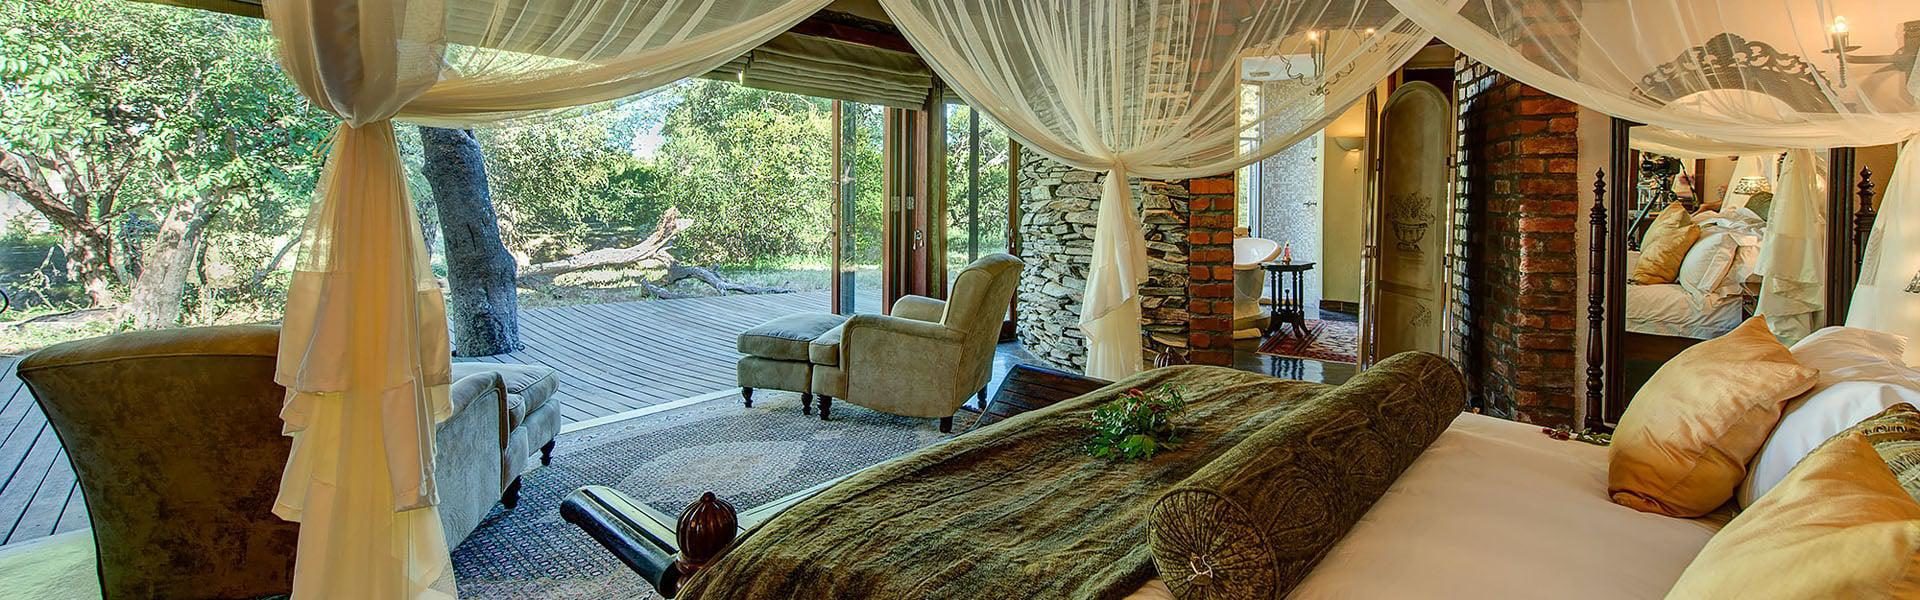 Hotels to stay in Arusha for Kilimanjaro, Safari & Mount Meru trips